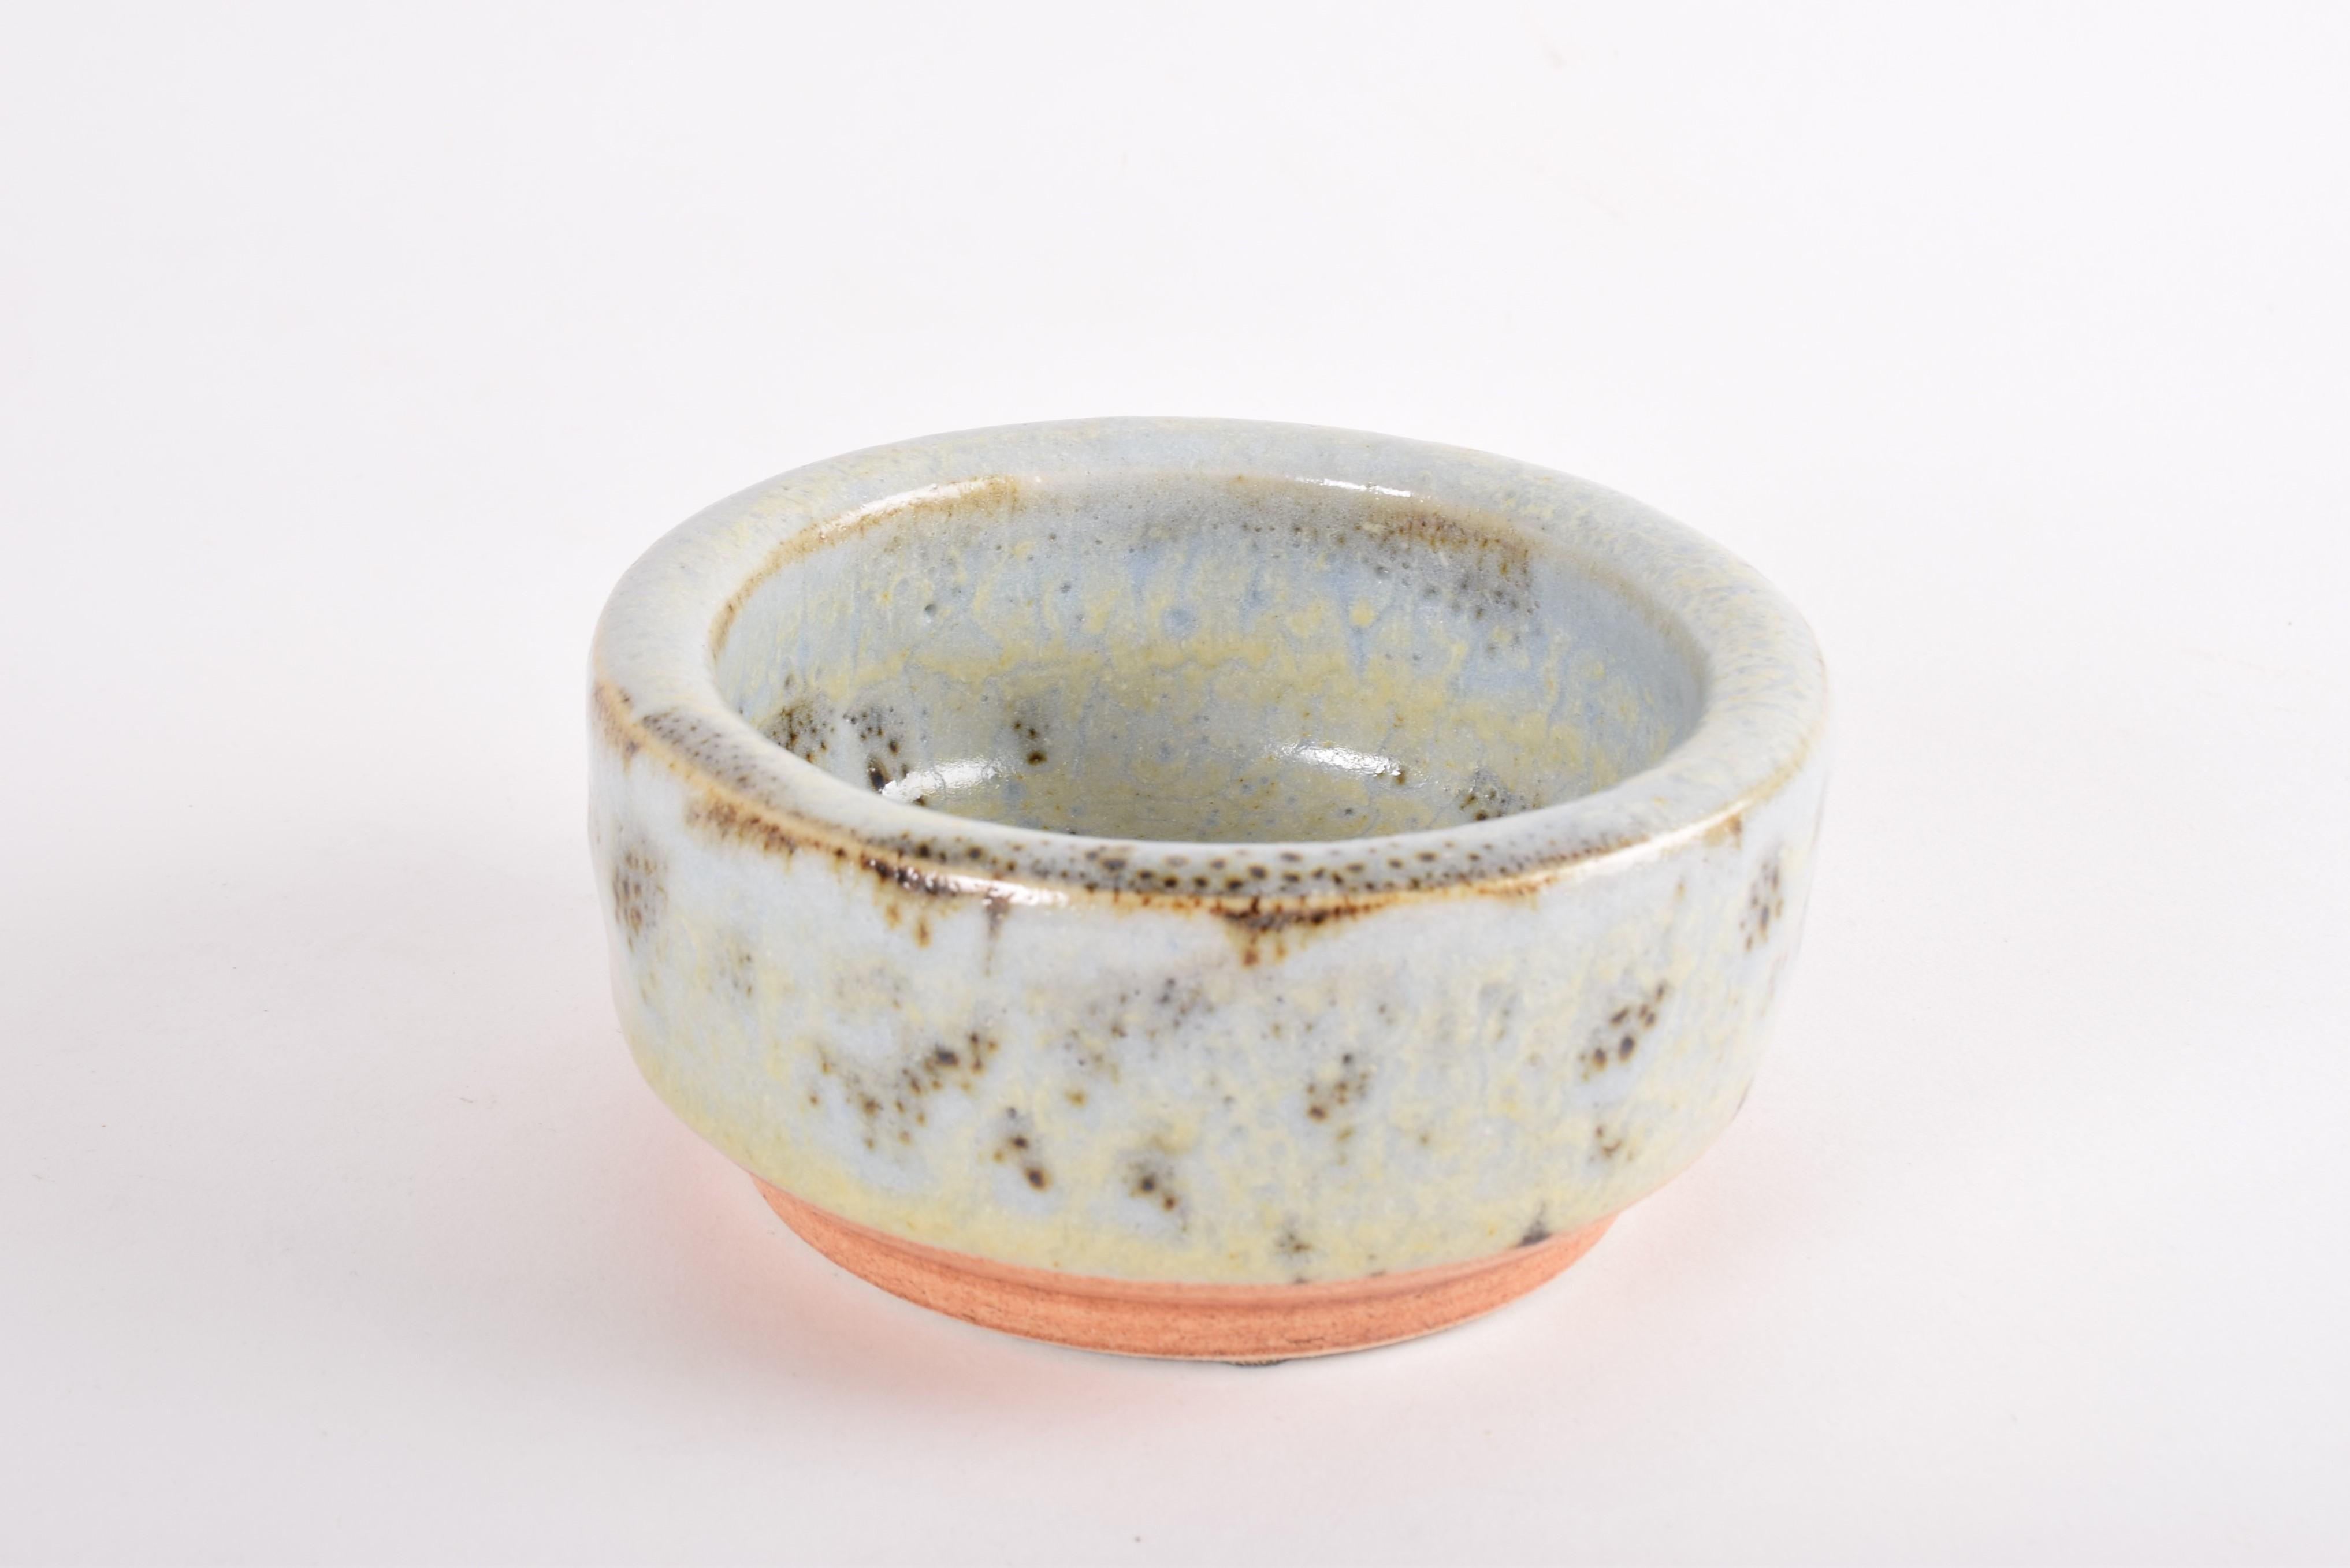 Scandinavian Modern Jørgen Mogensen Own Studio Bowl with Speckled Glaze, Danish Modern Ceramic 1960s For Sale